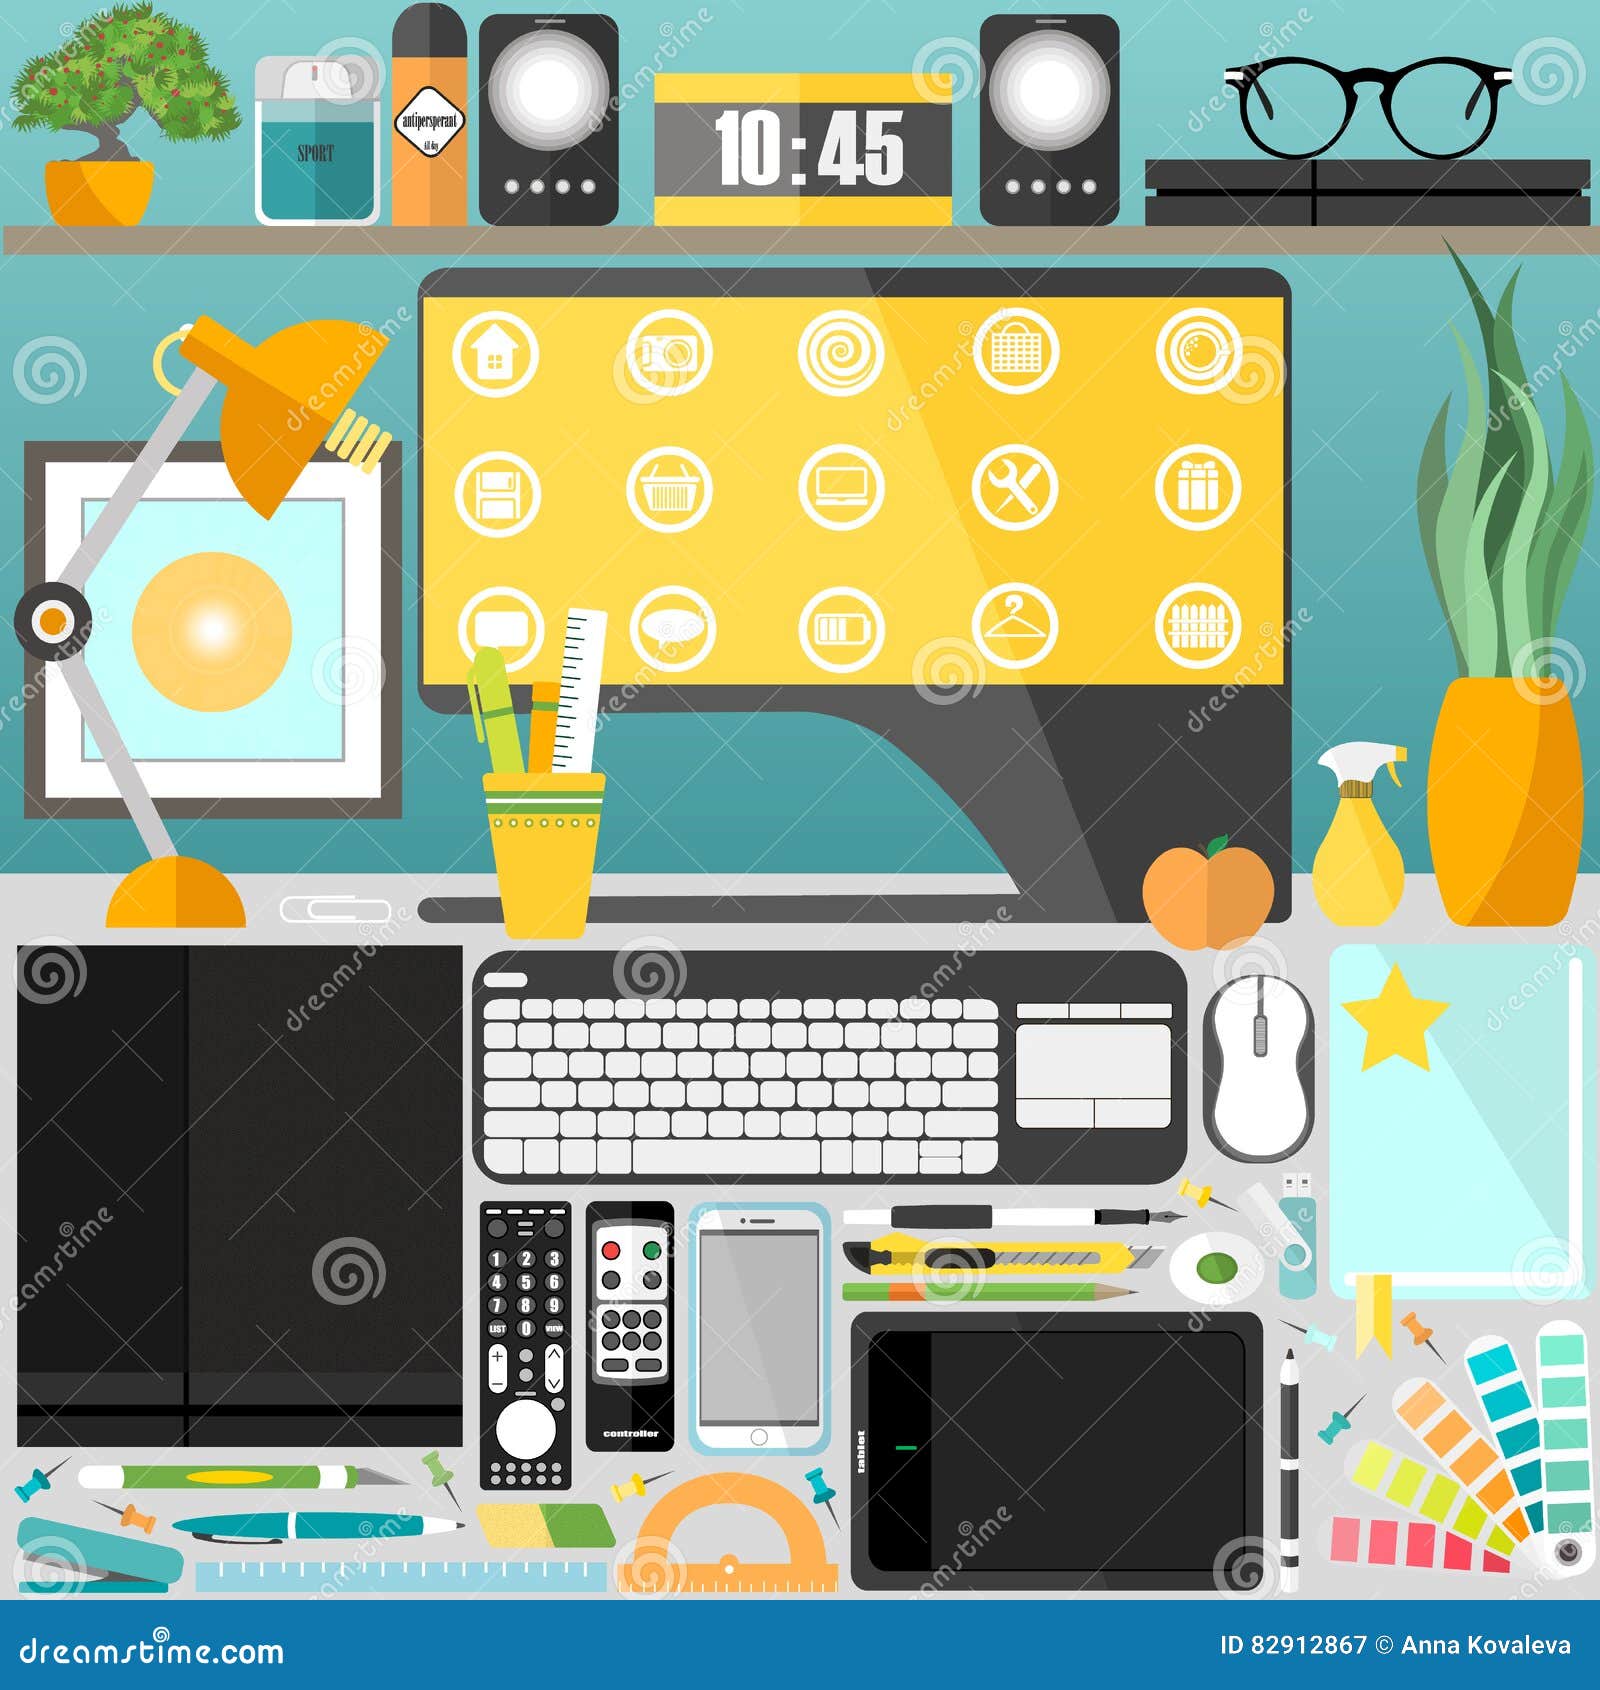 My Desktop Business Office Stock Vector Illustration Of Designer Keyboard